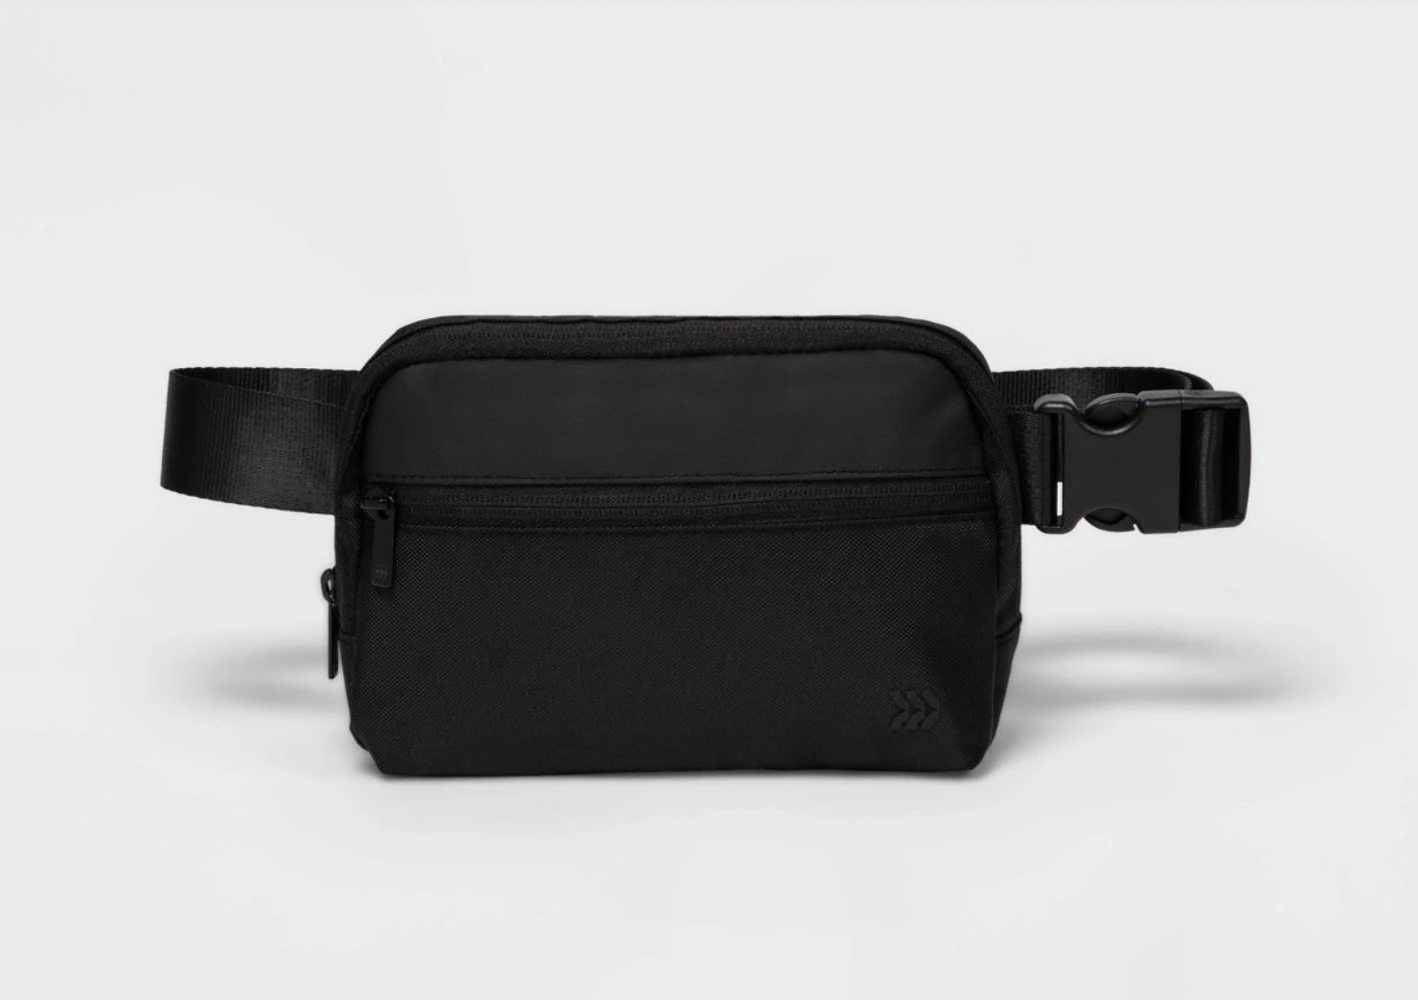 Lululemon Everywhere Belt Bag Dupe: $15 Lookalike at Target – StyleCaster